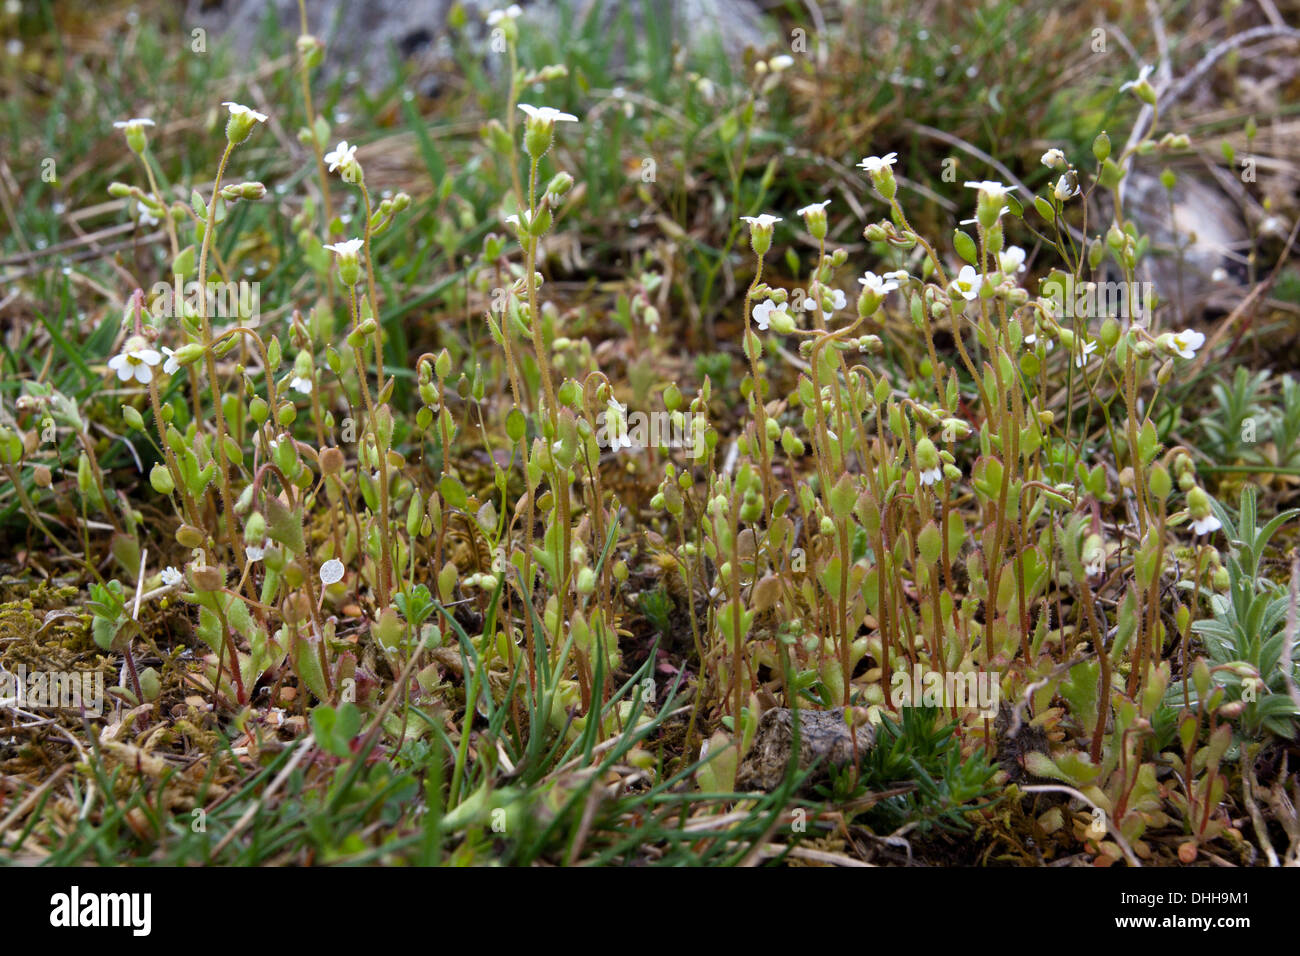 Saxifraga tridactylites, Rue-leaved saxifrage Stock Photo